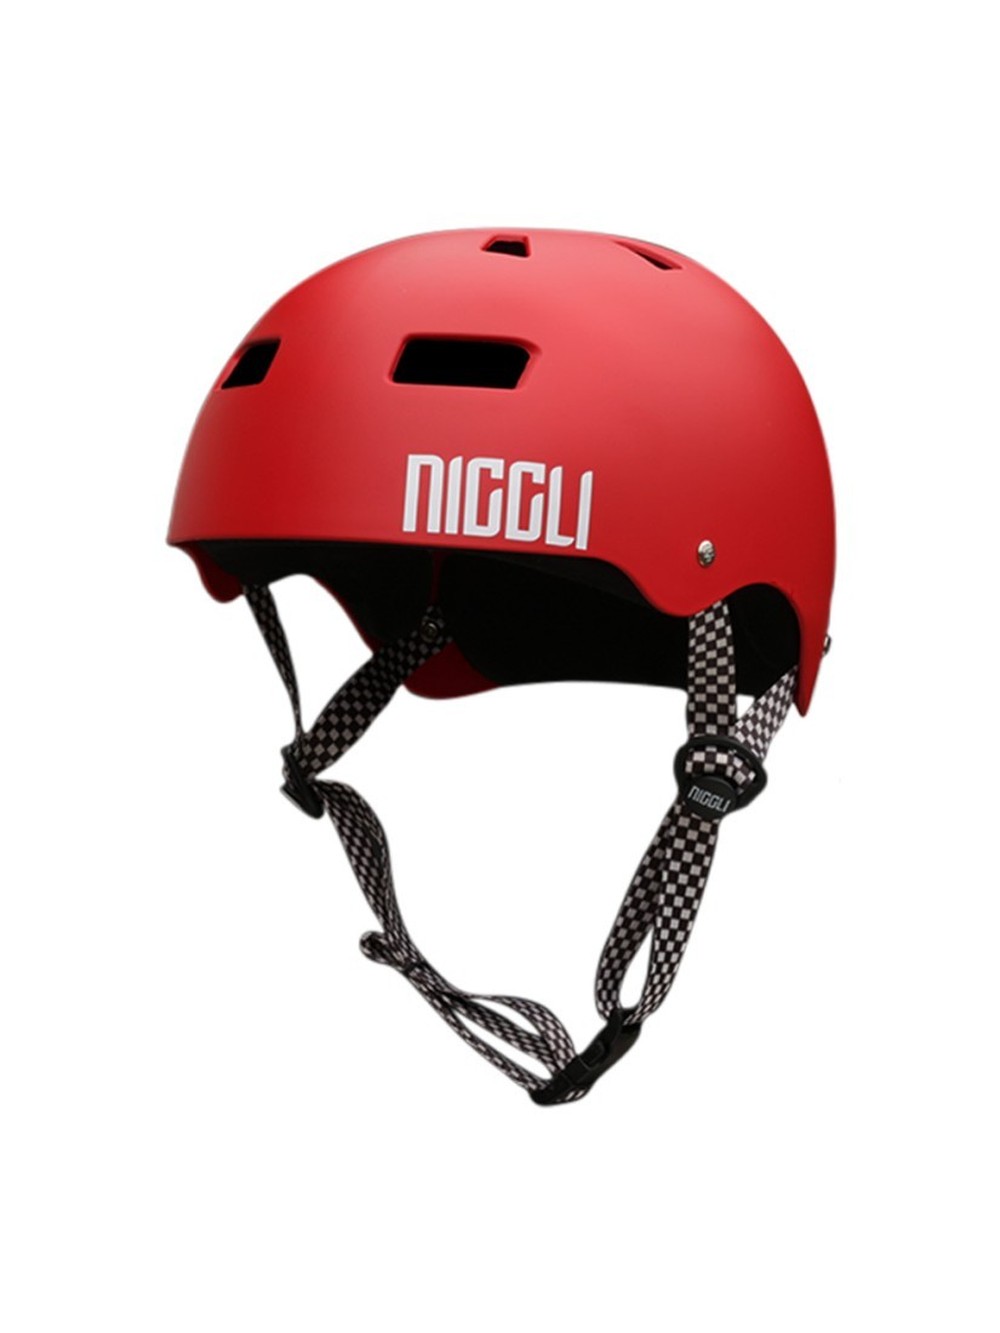 Capacete Niggli Iron Pro Fosco - Vermelho